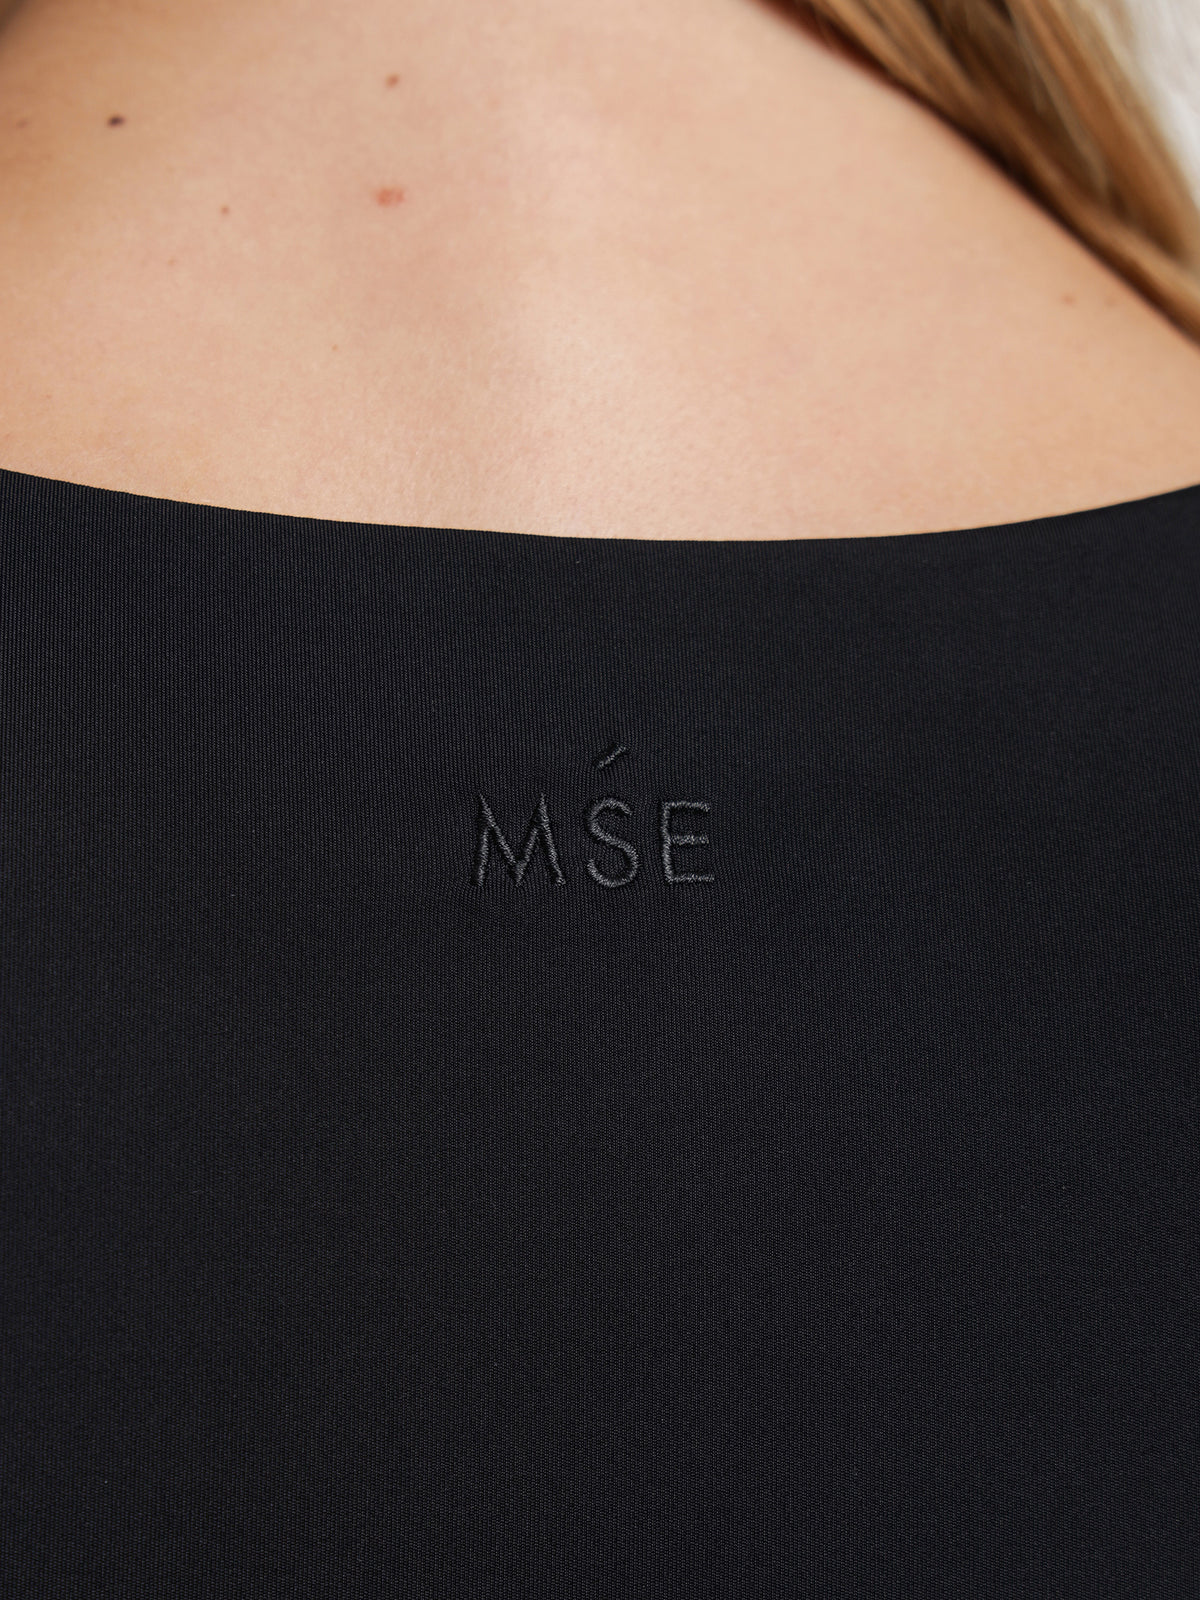 MSE Standard Crop T-Shirt in Black